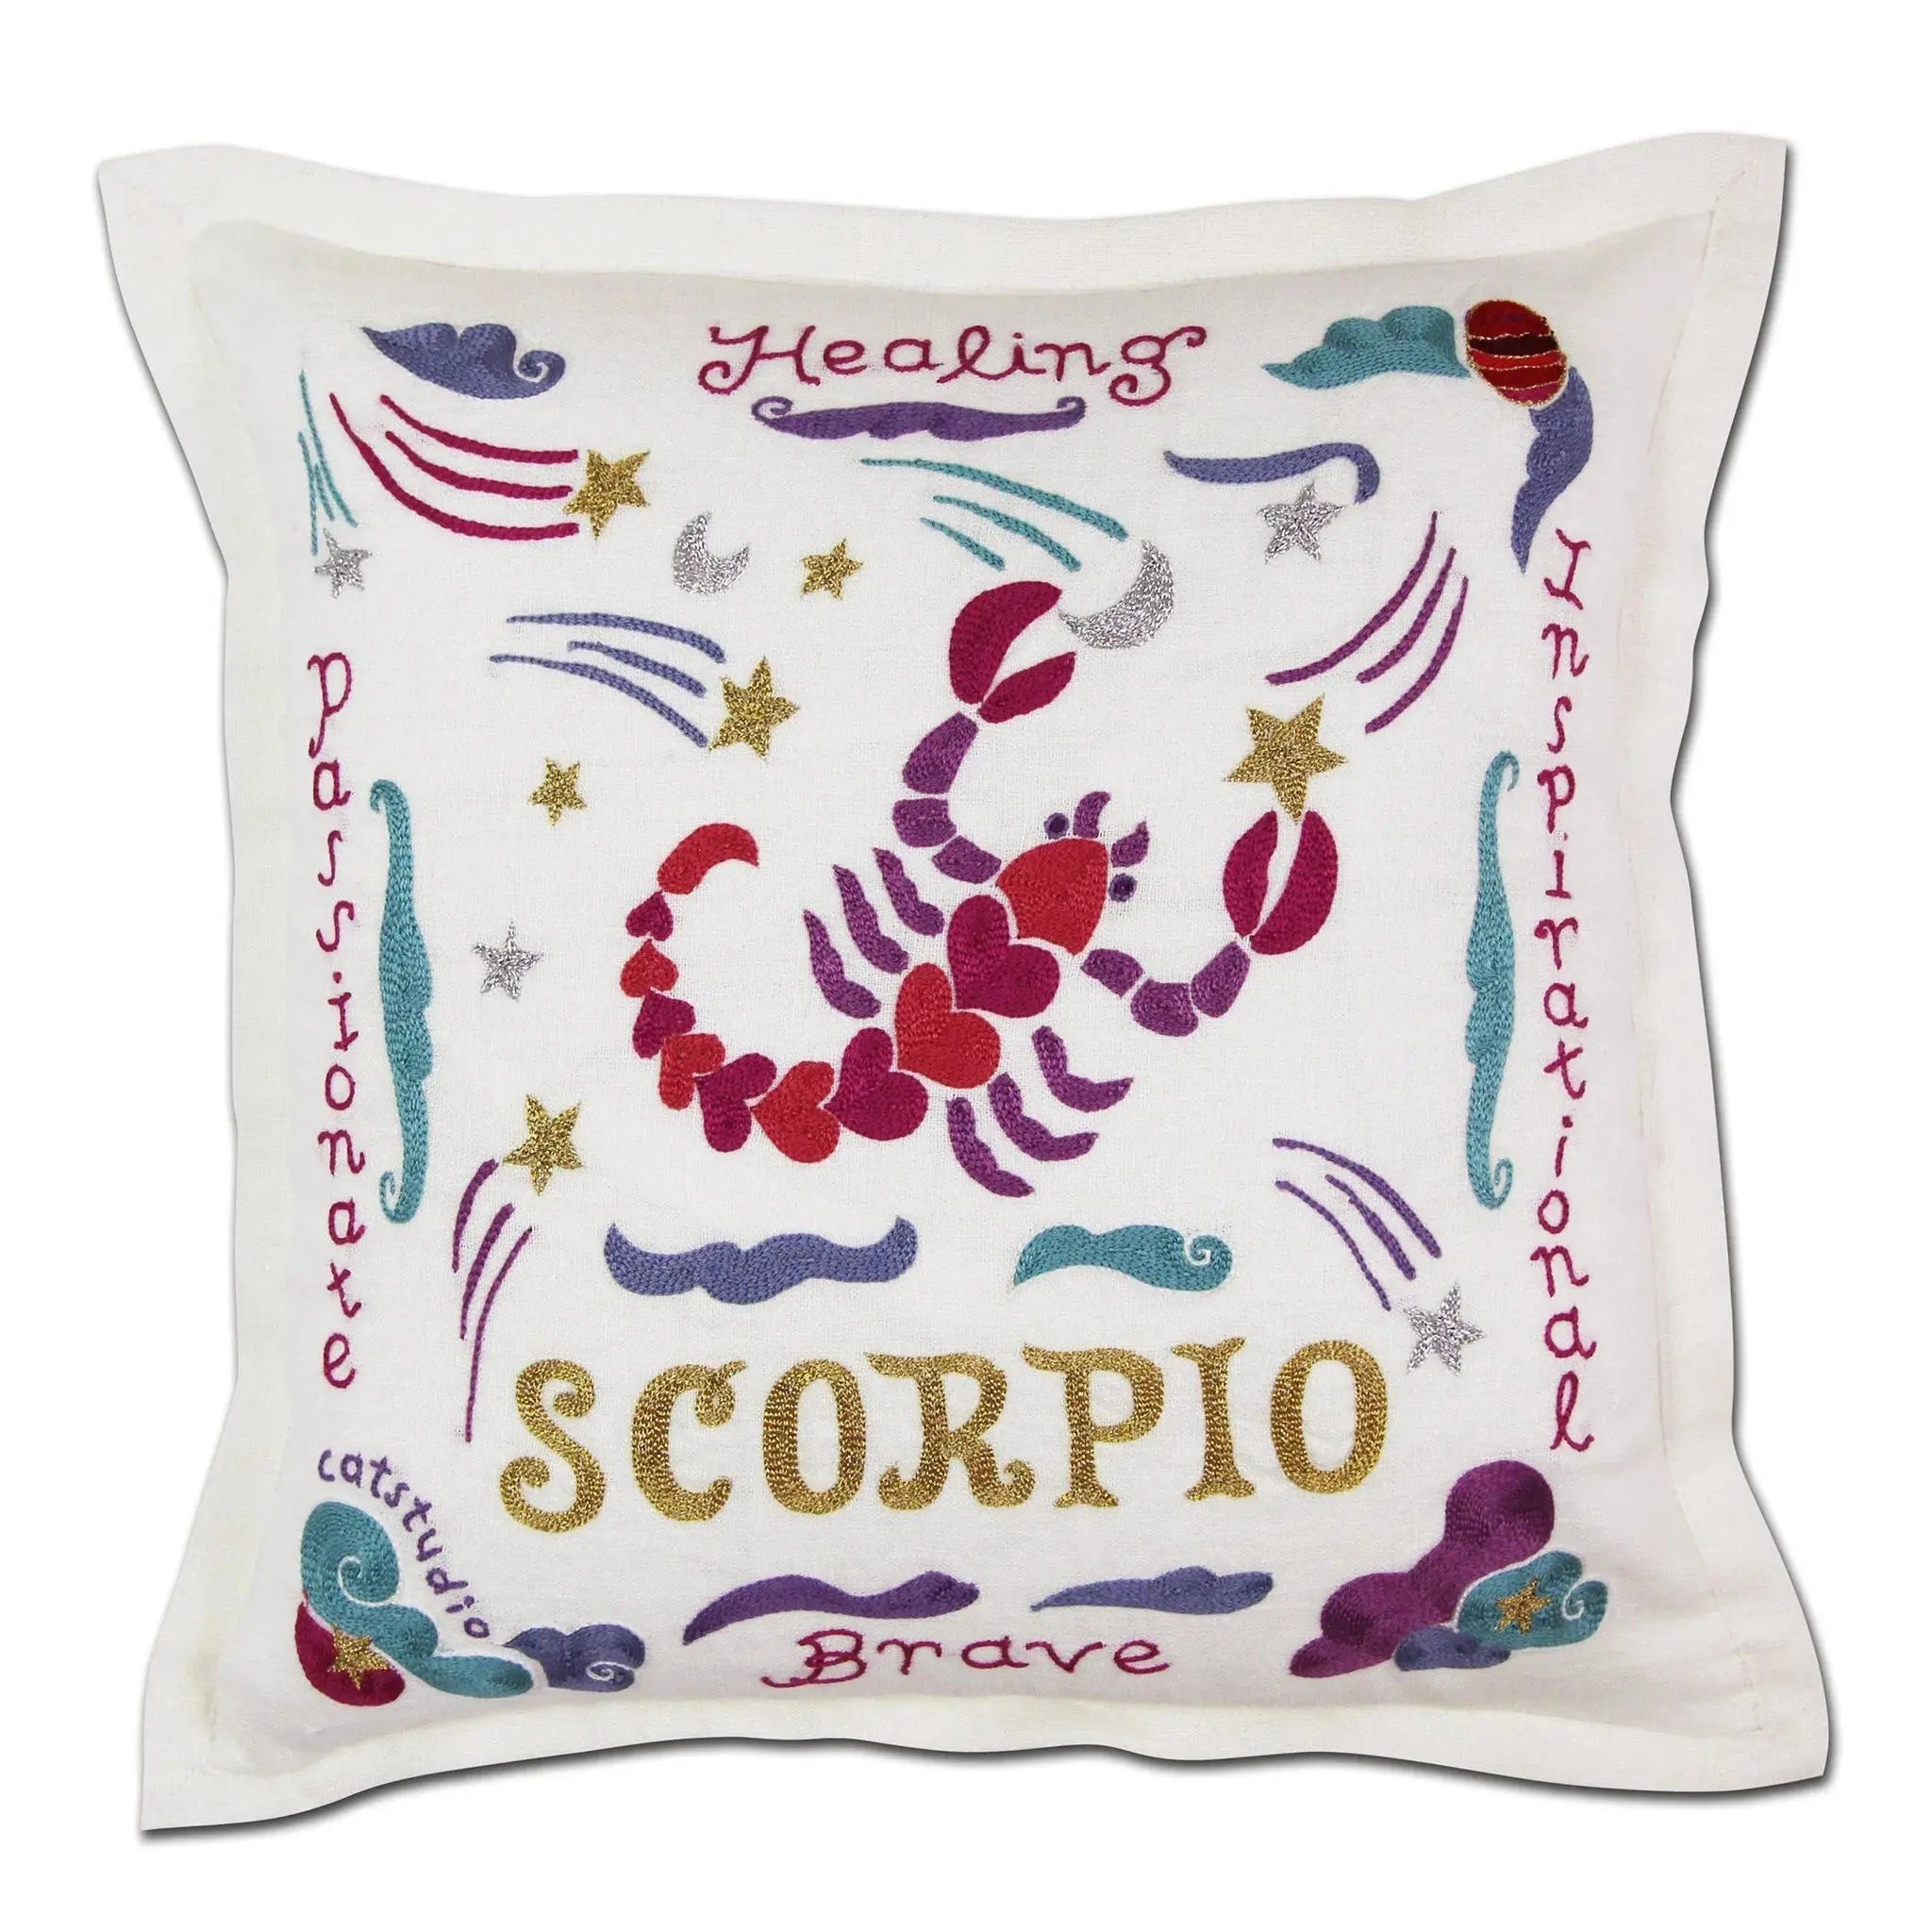 Catstudio Scorpio Pillow